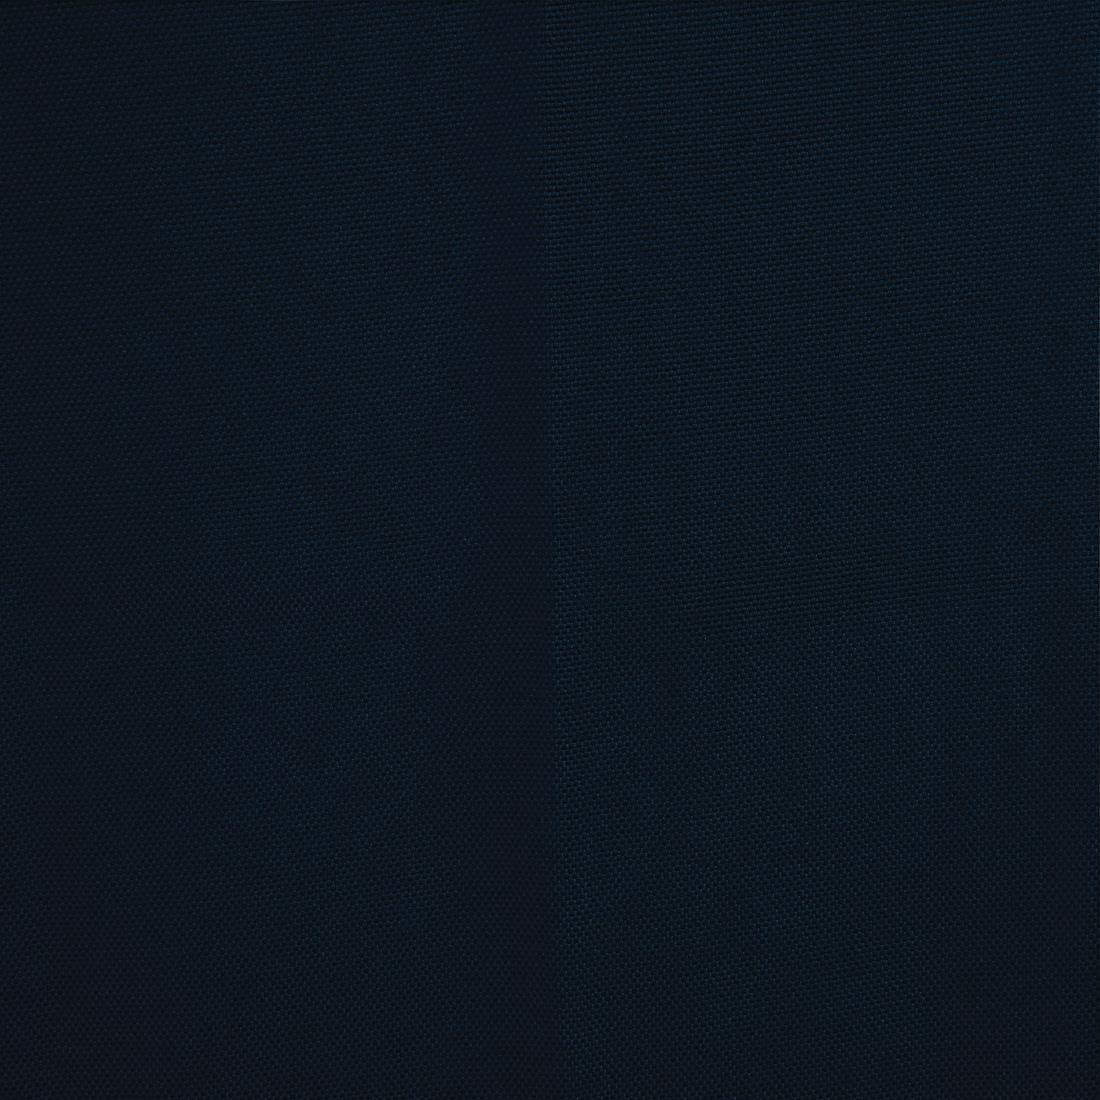 Bolero Dark Blue Canvas Barrier - DL480  - 2